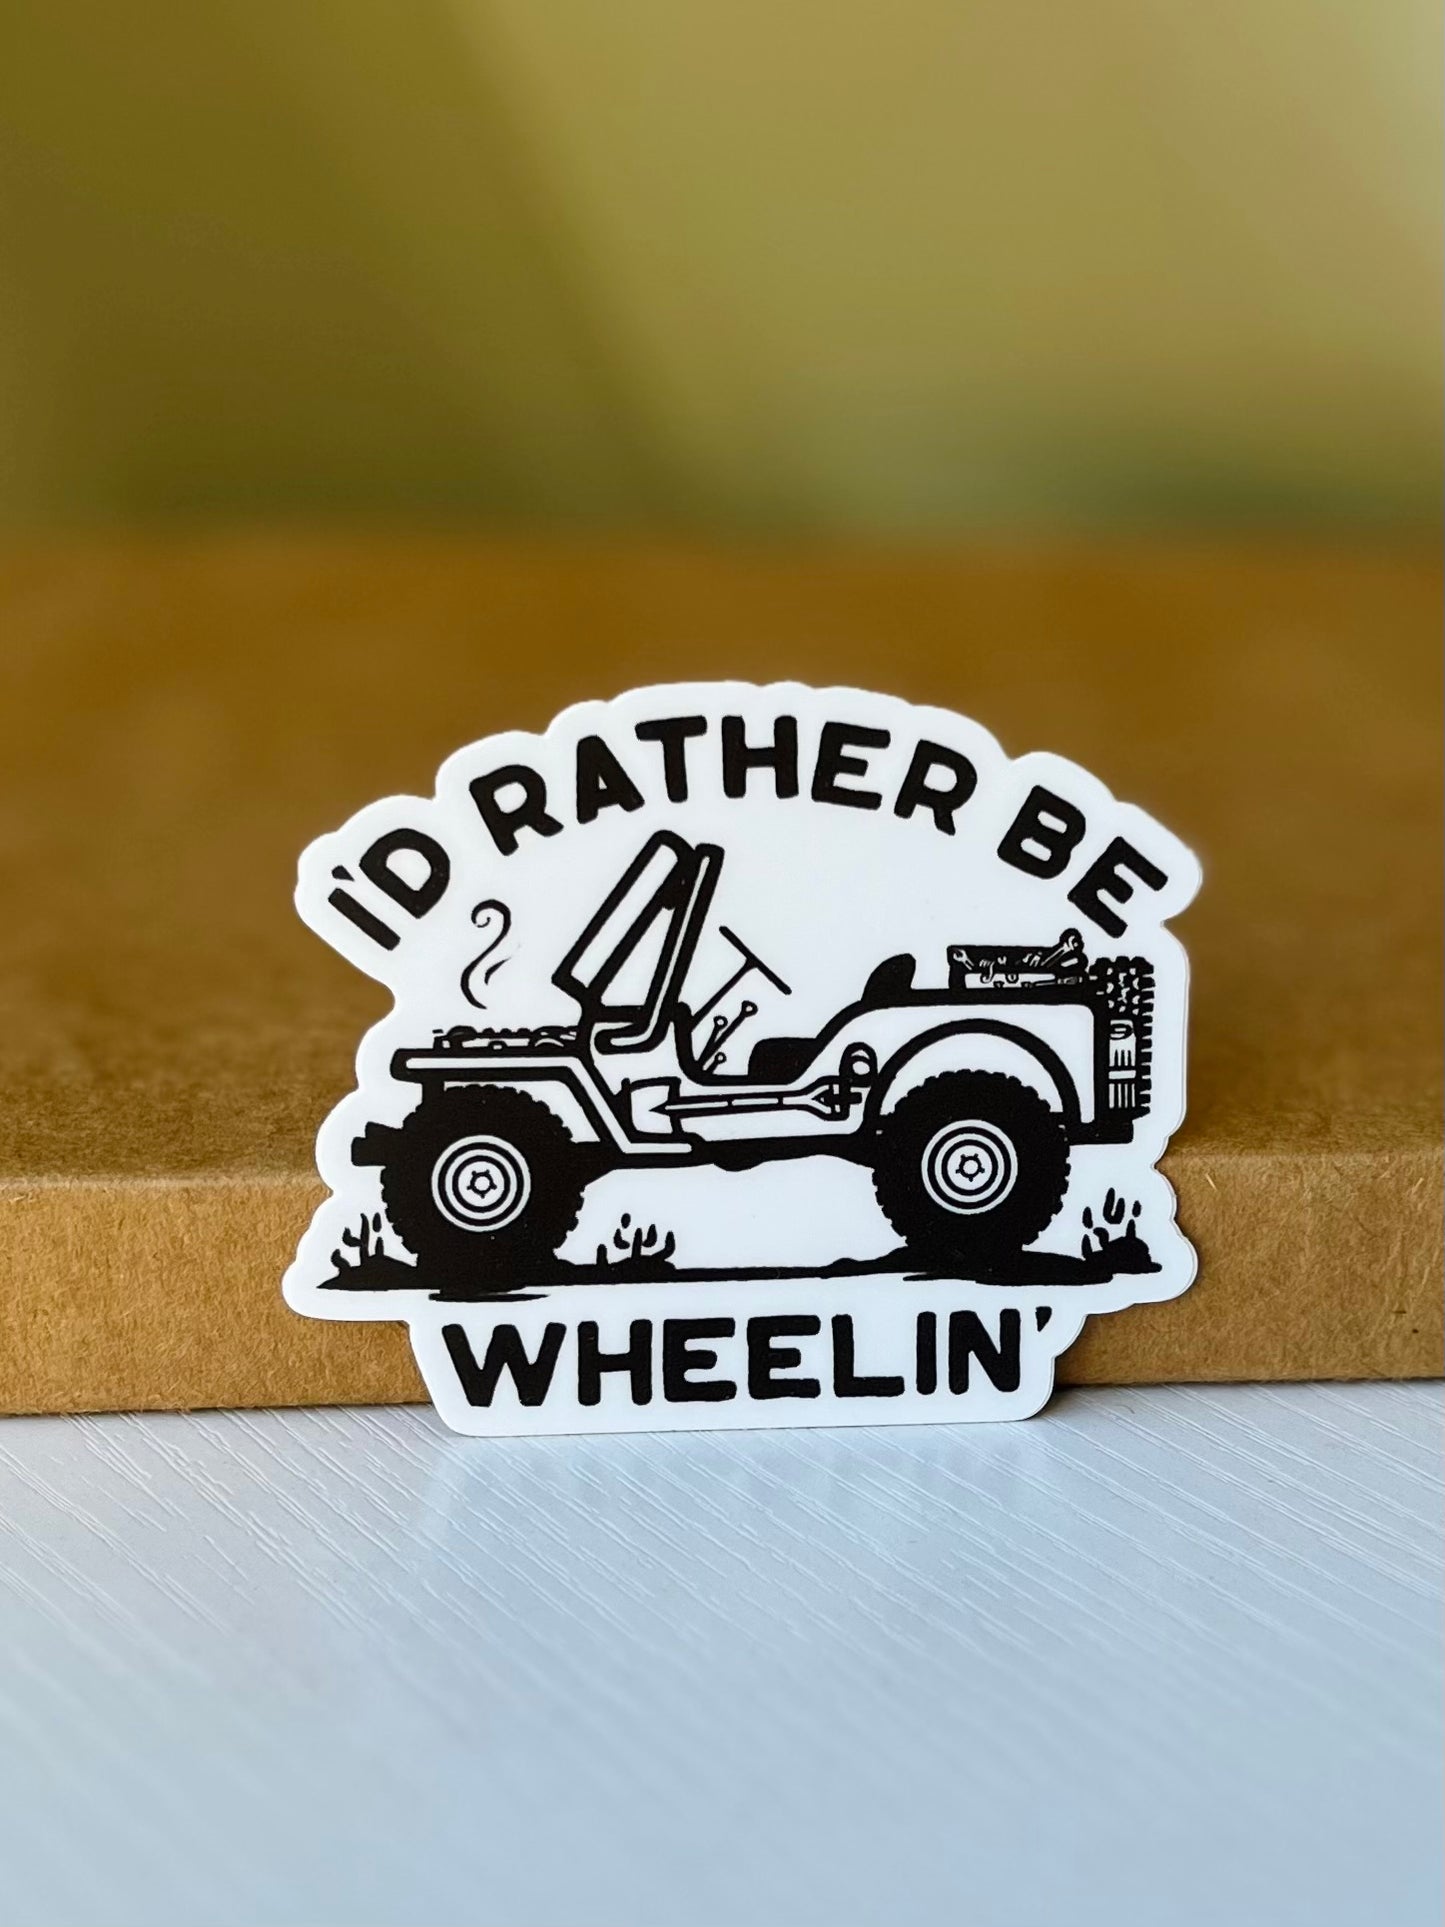 I’d Rather be Wheelin’